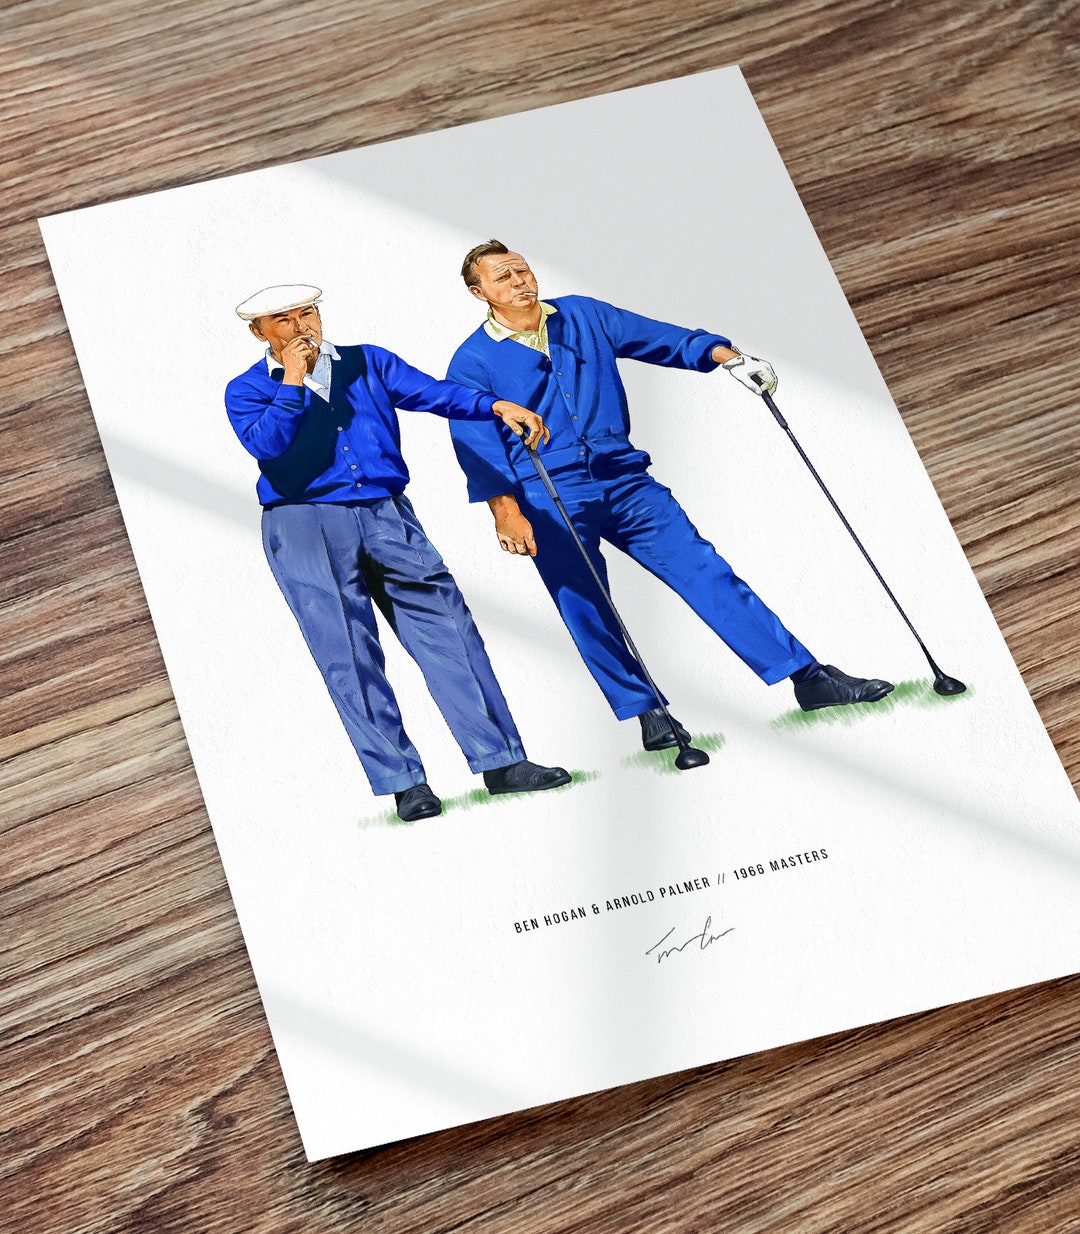 Ben Hogan Arnold Palmer Smoking 1966 Masters Golf Poster Wall - Etsy